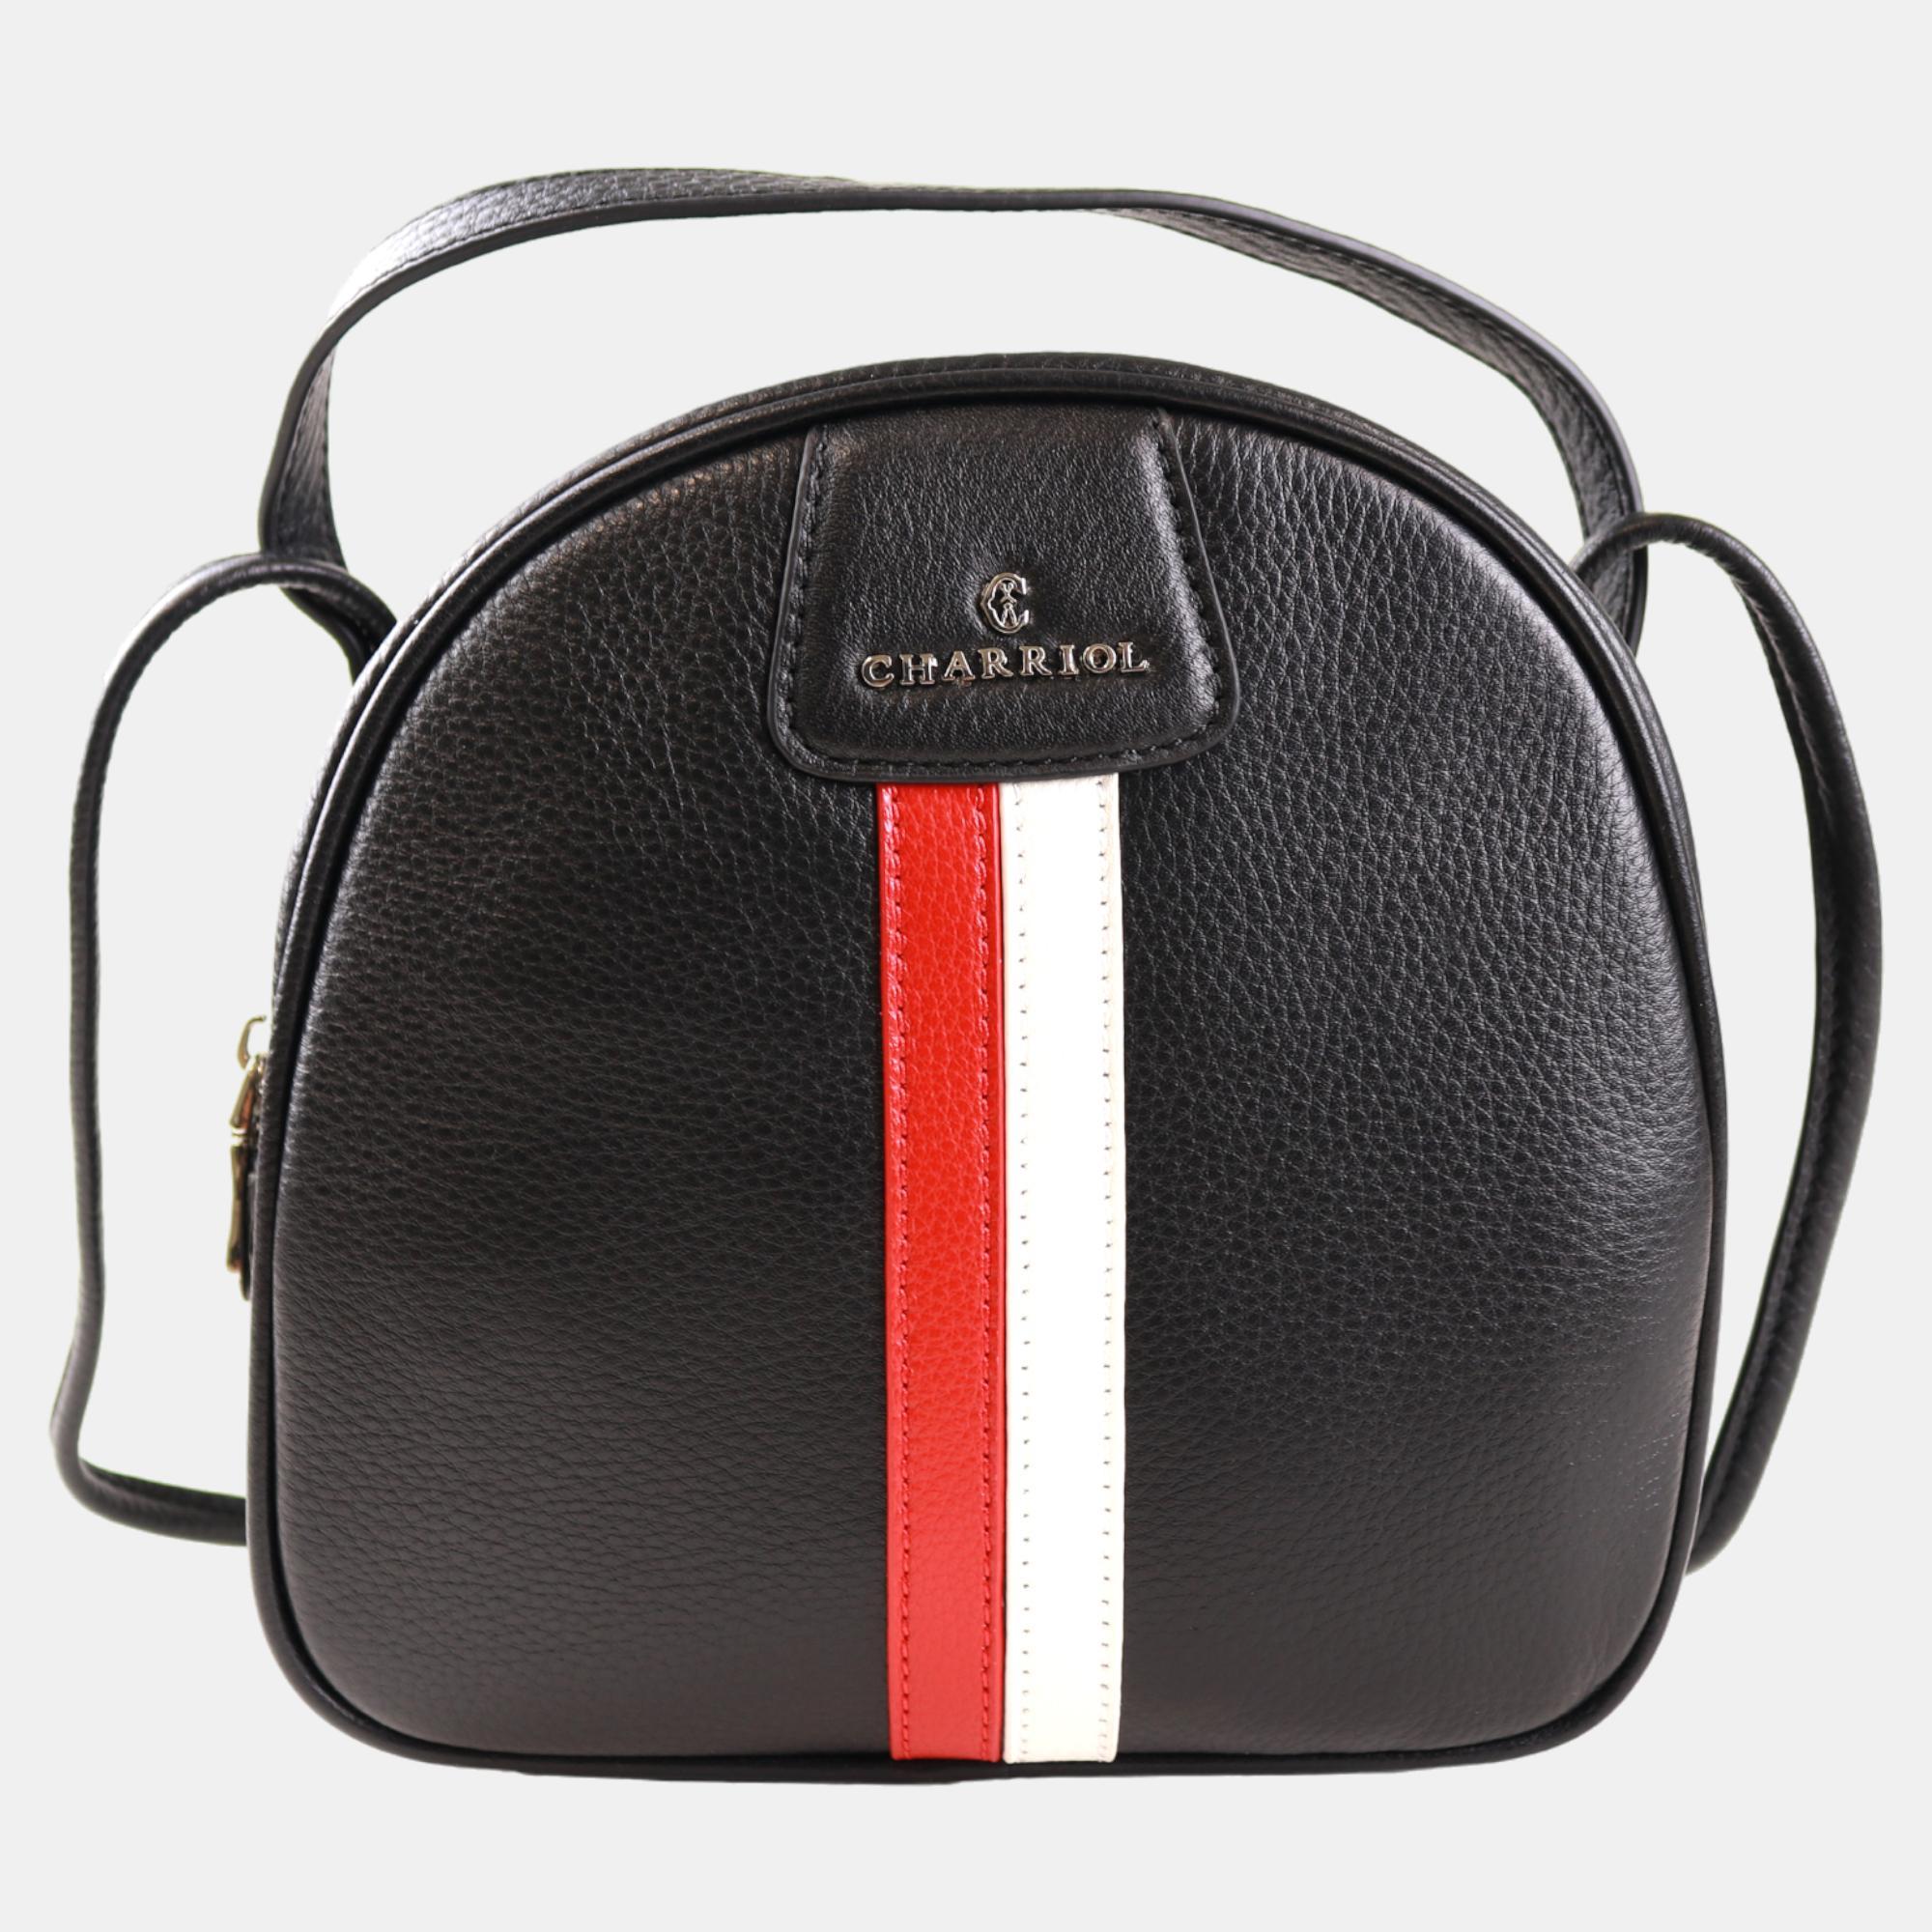 Charriol black leather conic handbag